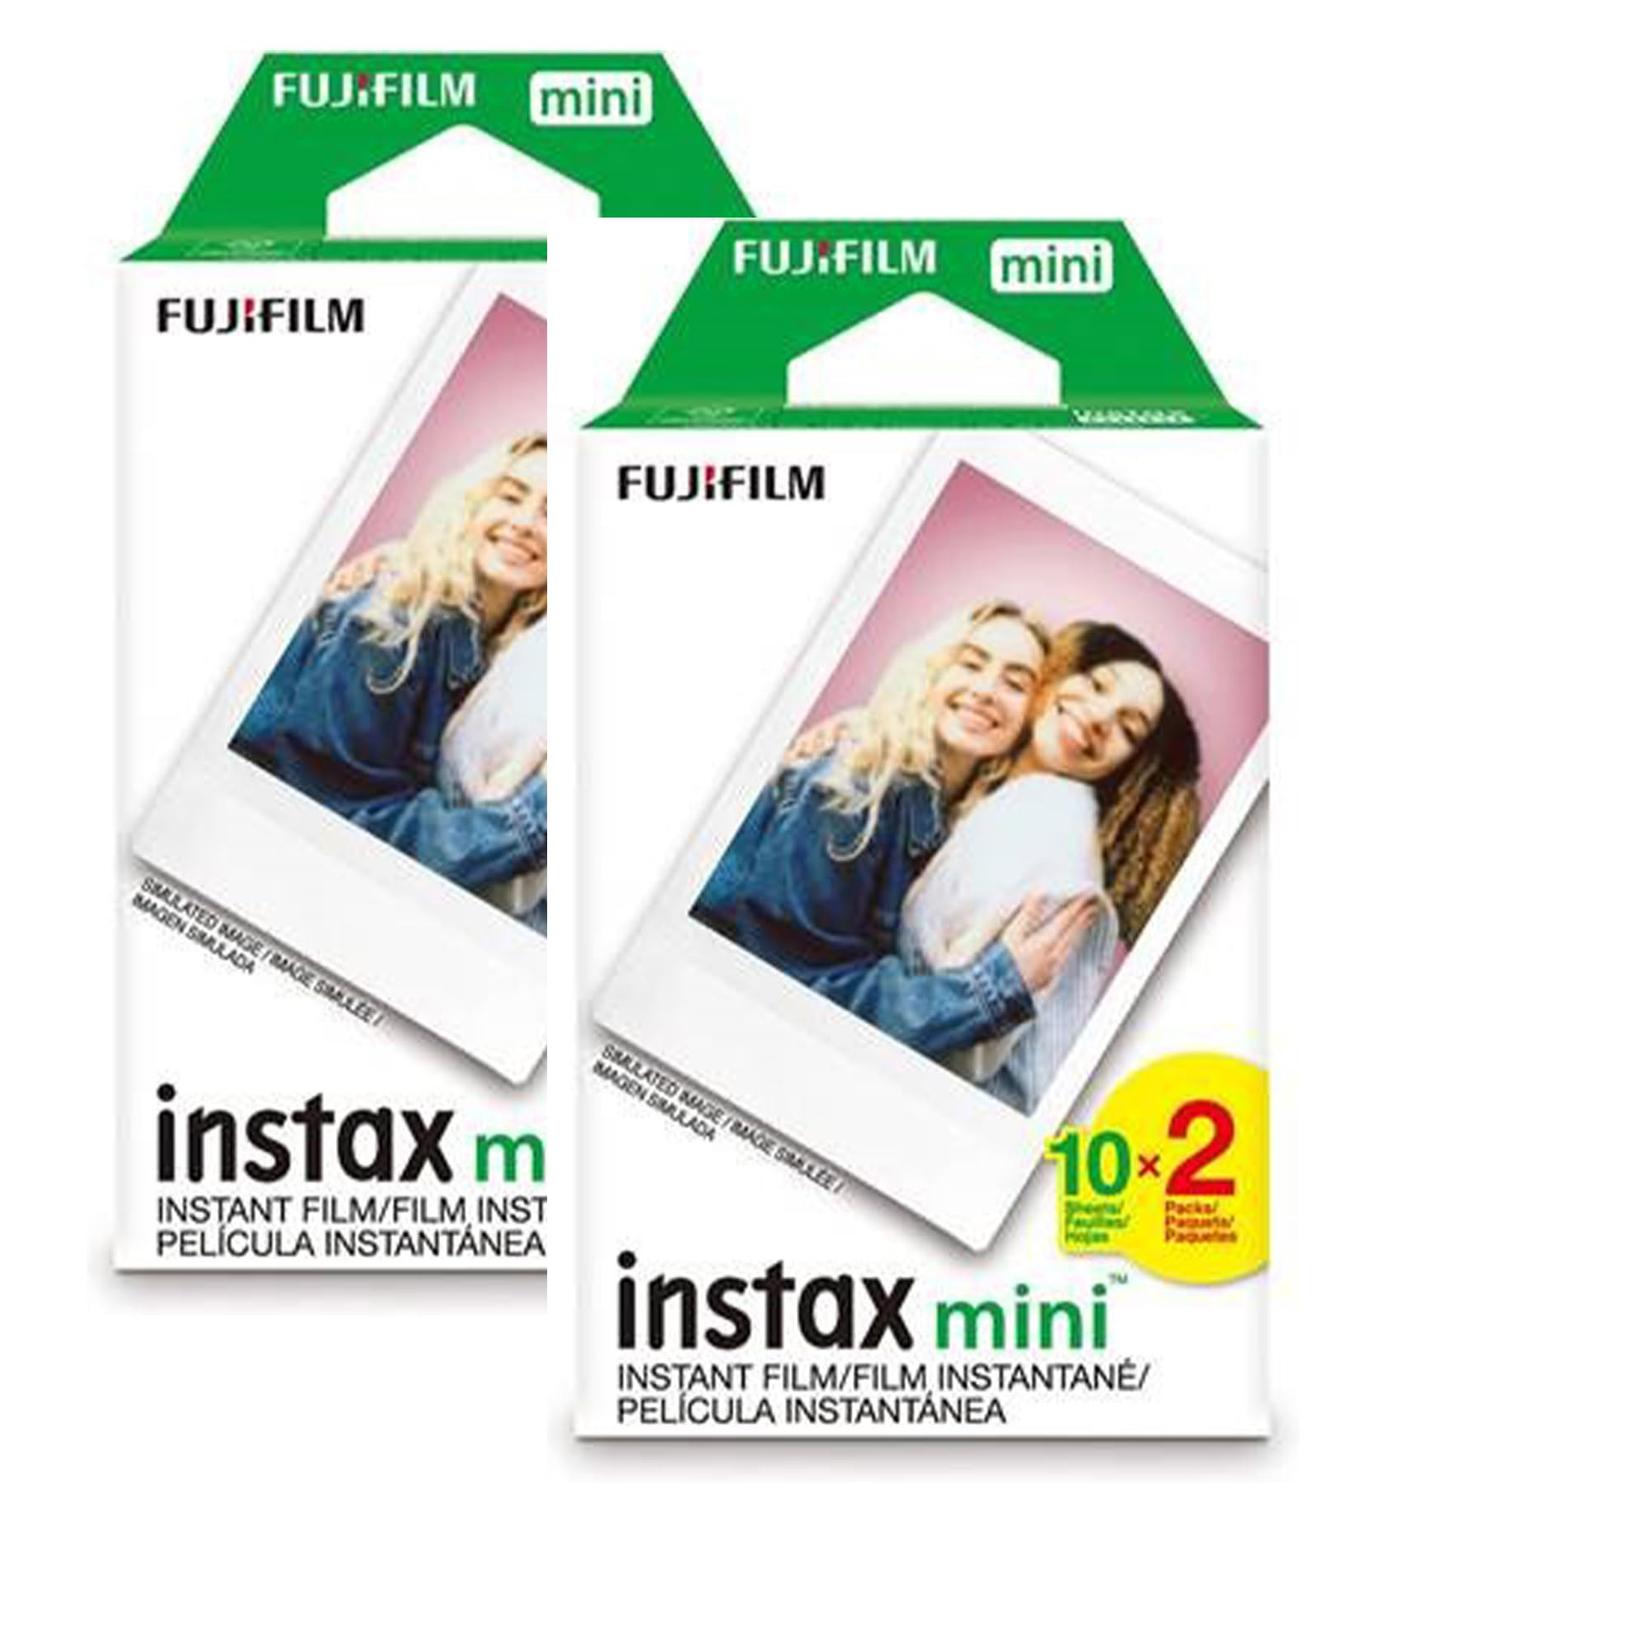 Selected image for FUJIFILM Mini Film za Instax uređaje, 10x2, 2 komada